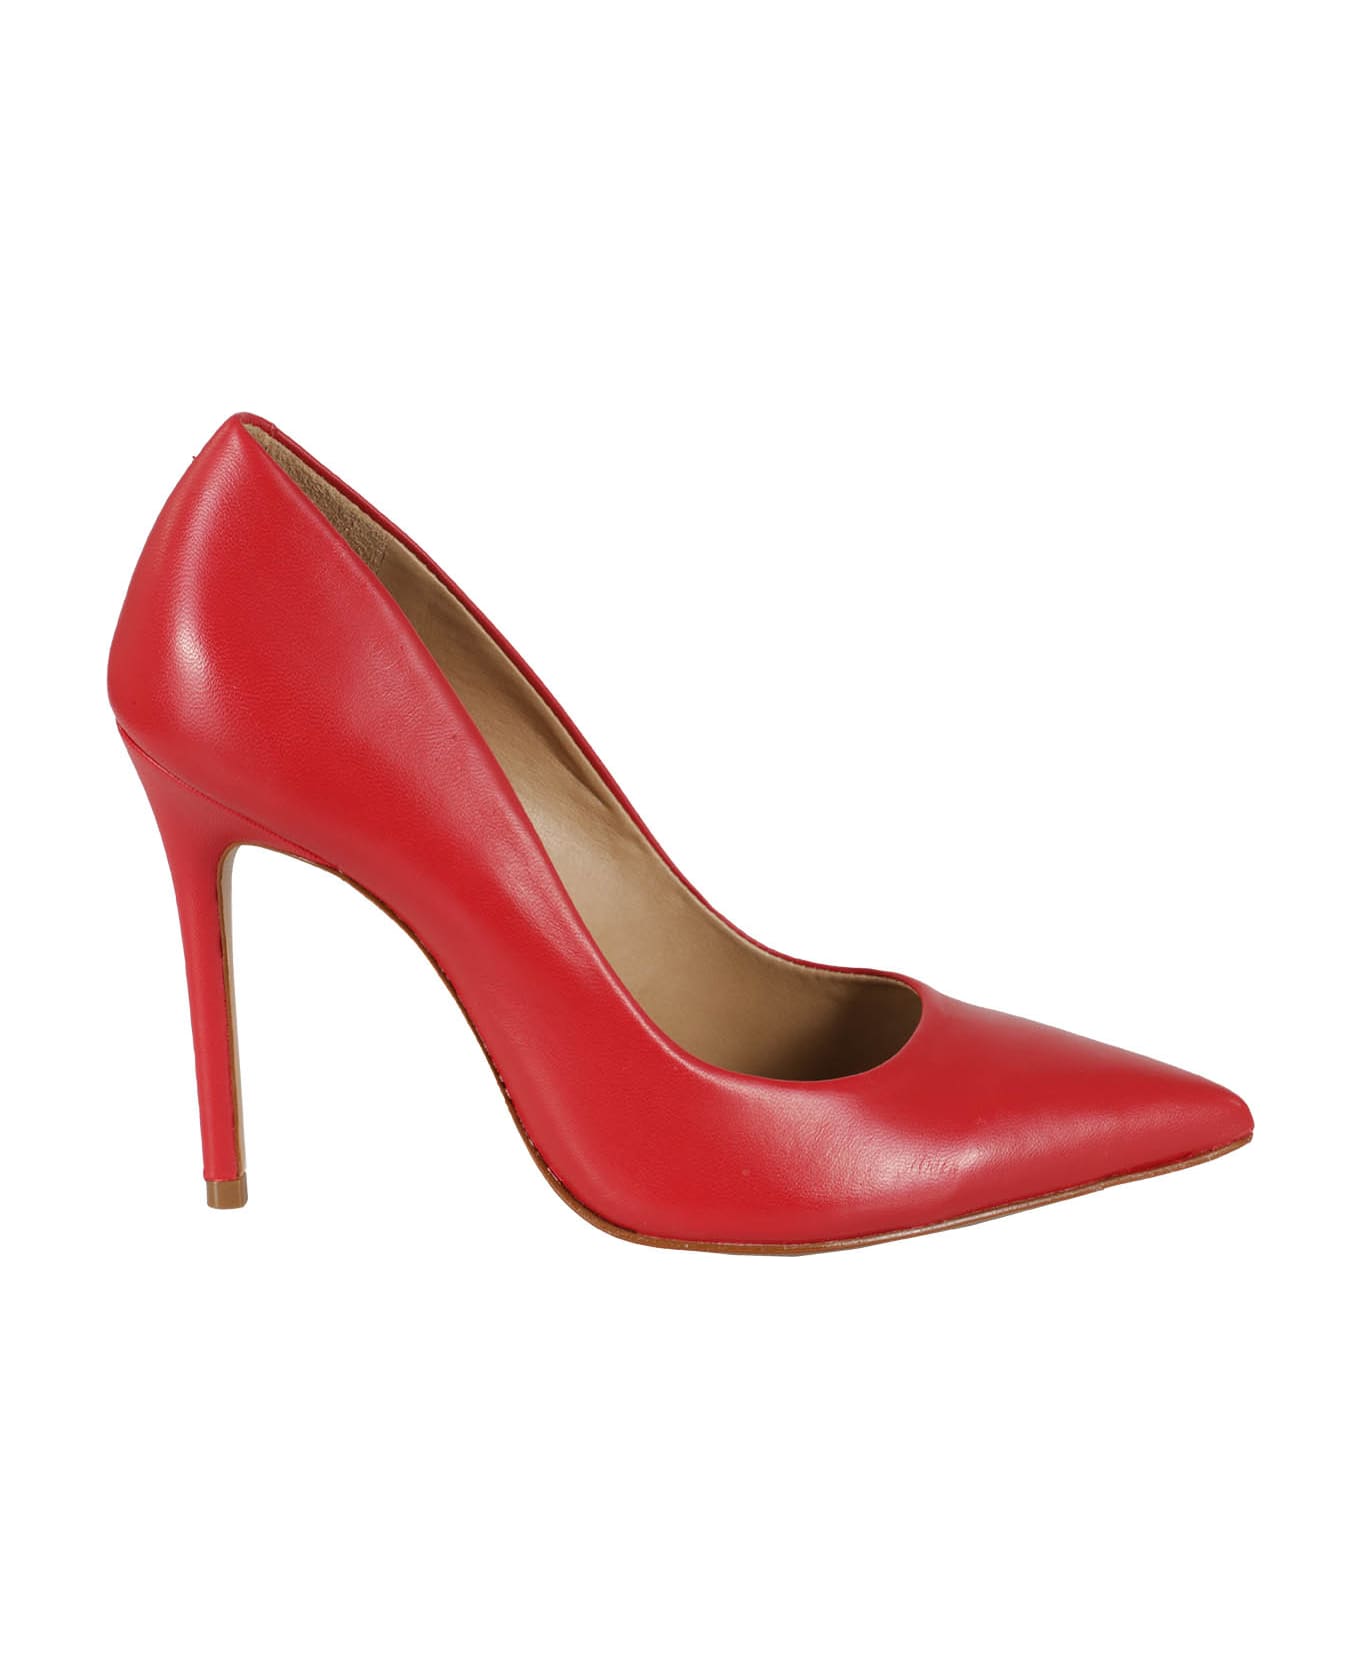 Schutz Shoes - Red